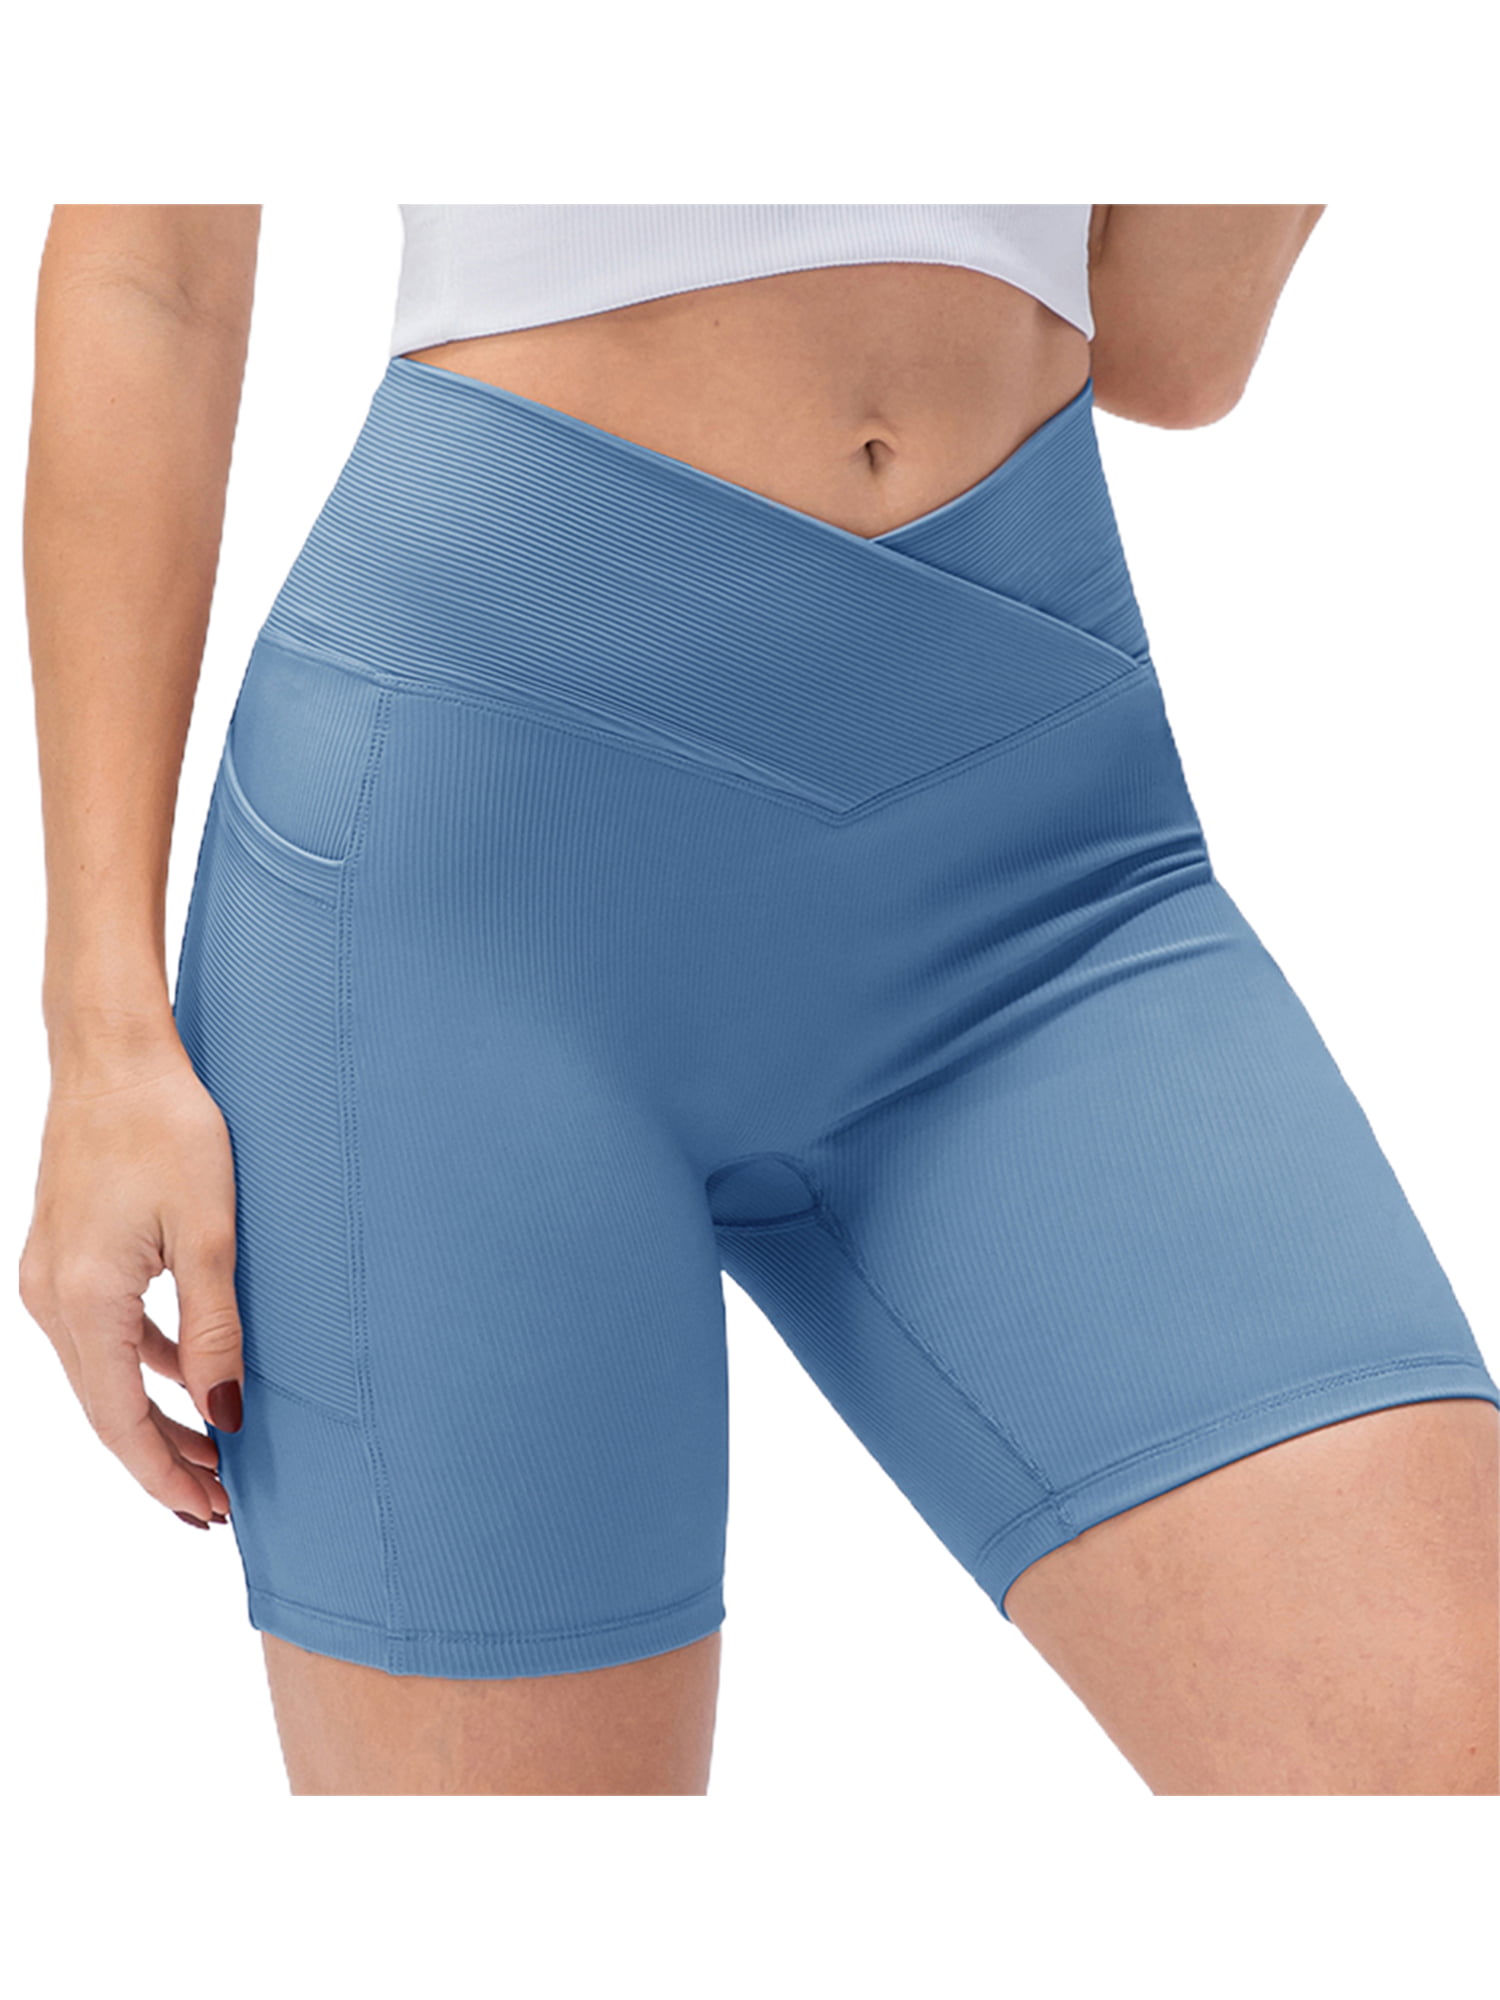 JACK SMITH Womens Stretchy High Waist Tummy Control Yoga Shorts with Hidden Pockets 